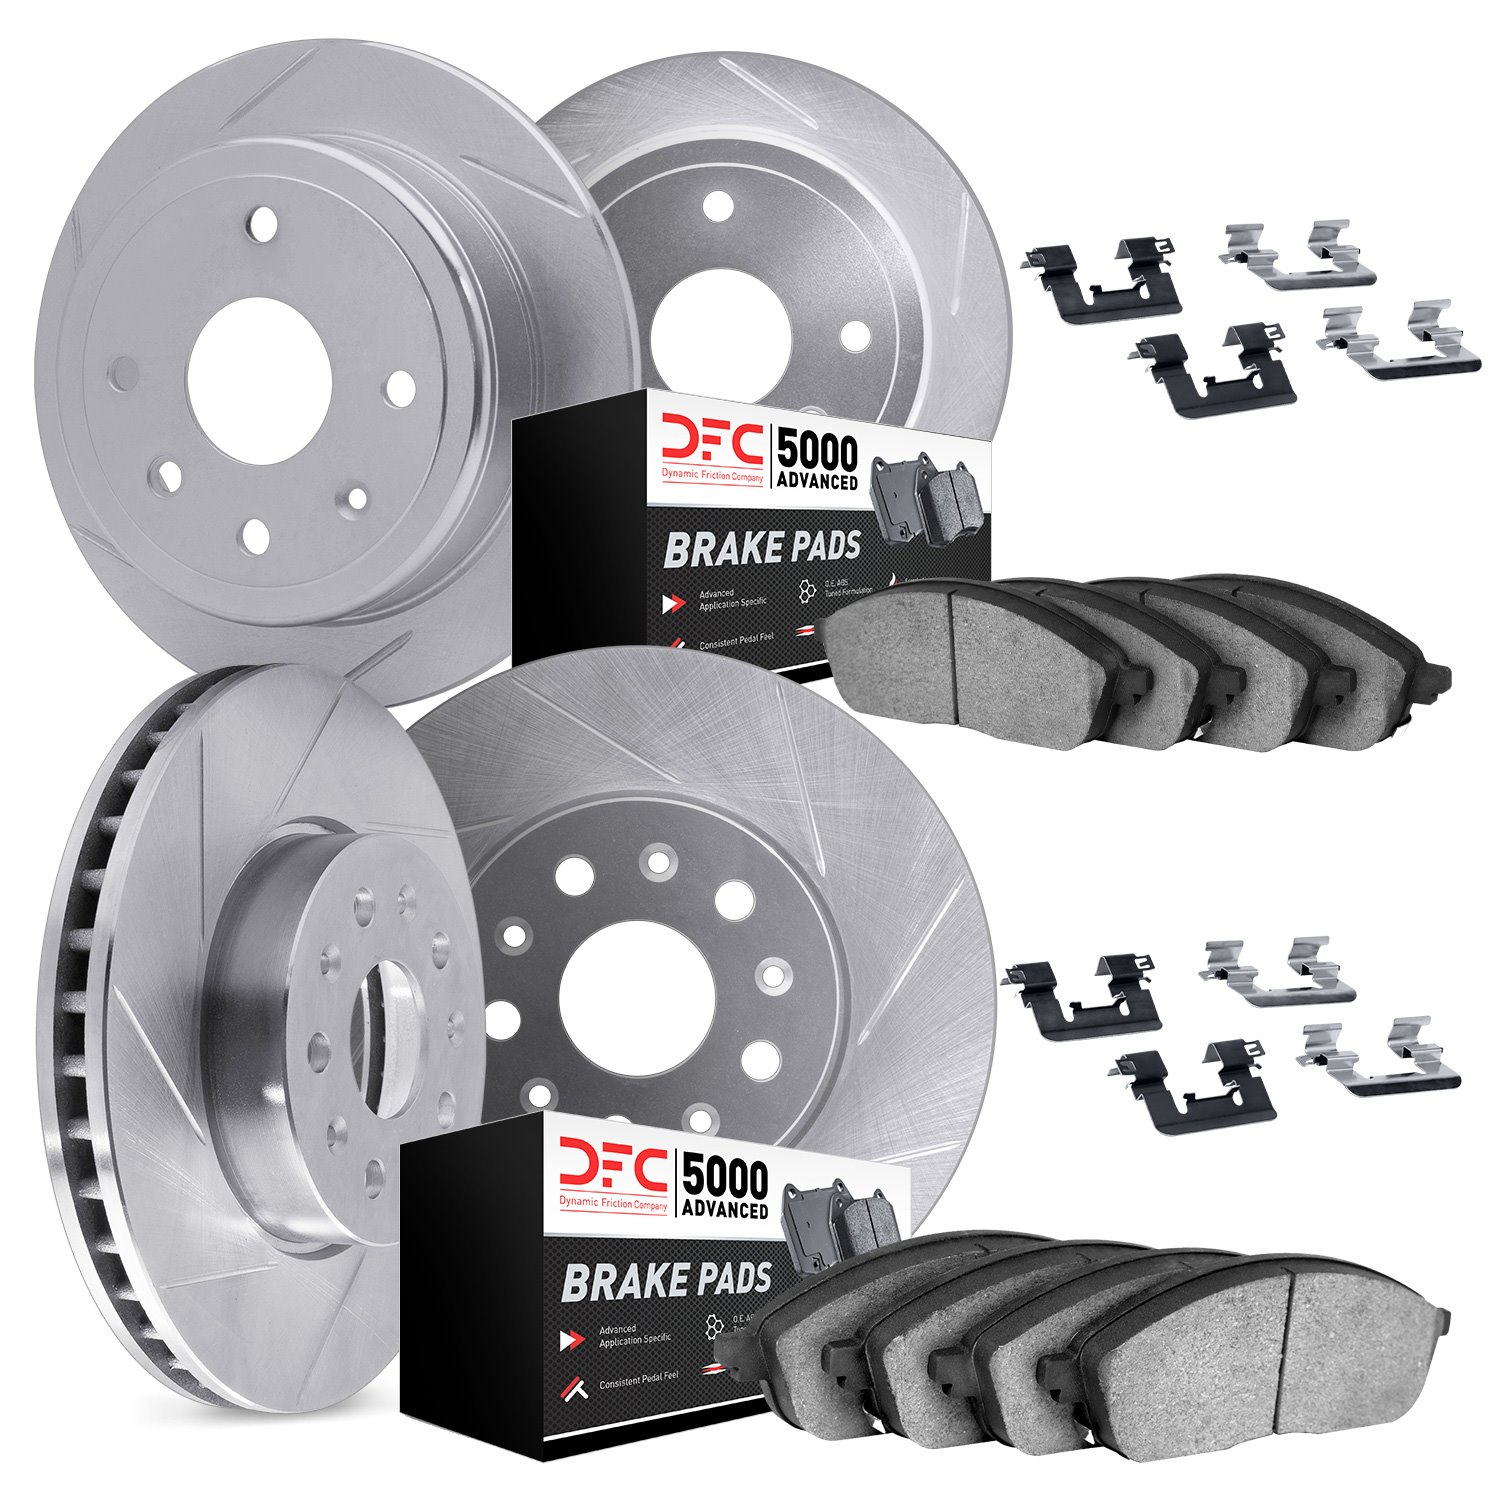 5514-40030 Slotted Brake Rotors w/5000 Advanced Brake Pads Kit & Hardware [Silver], 2012-2020 Multiple Makes/Models, Position: F